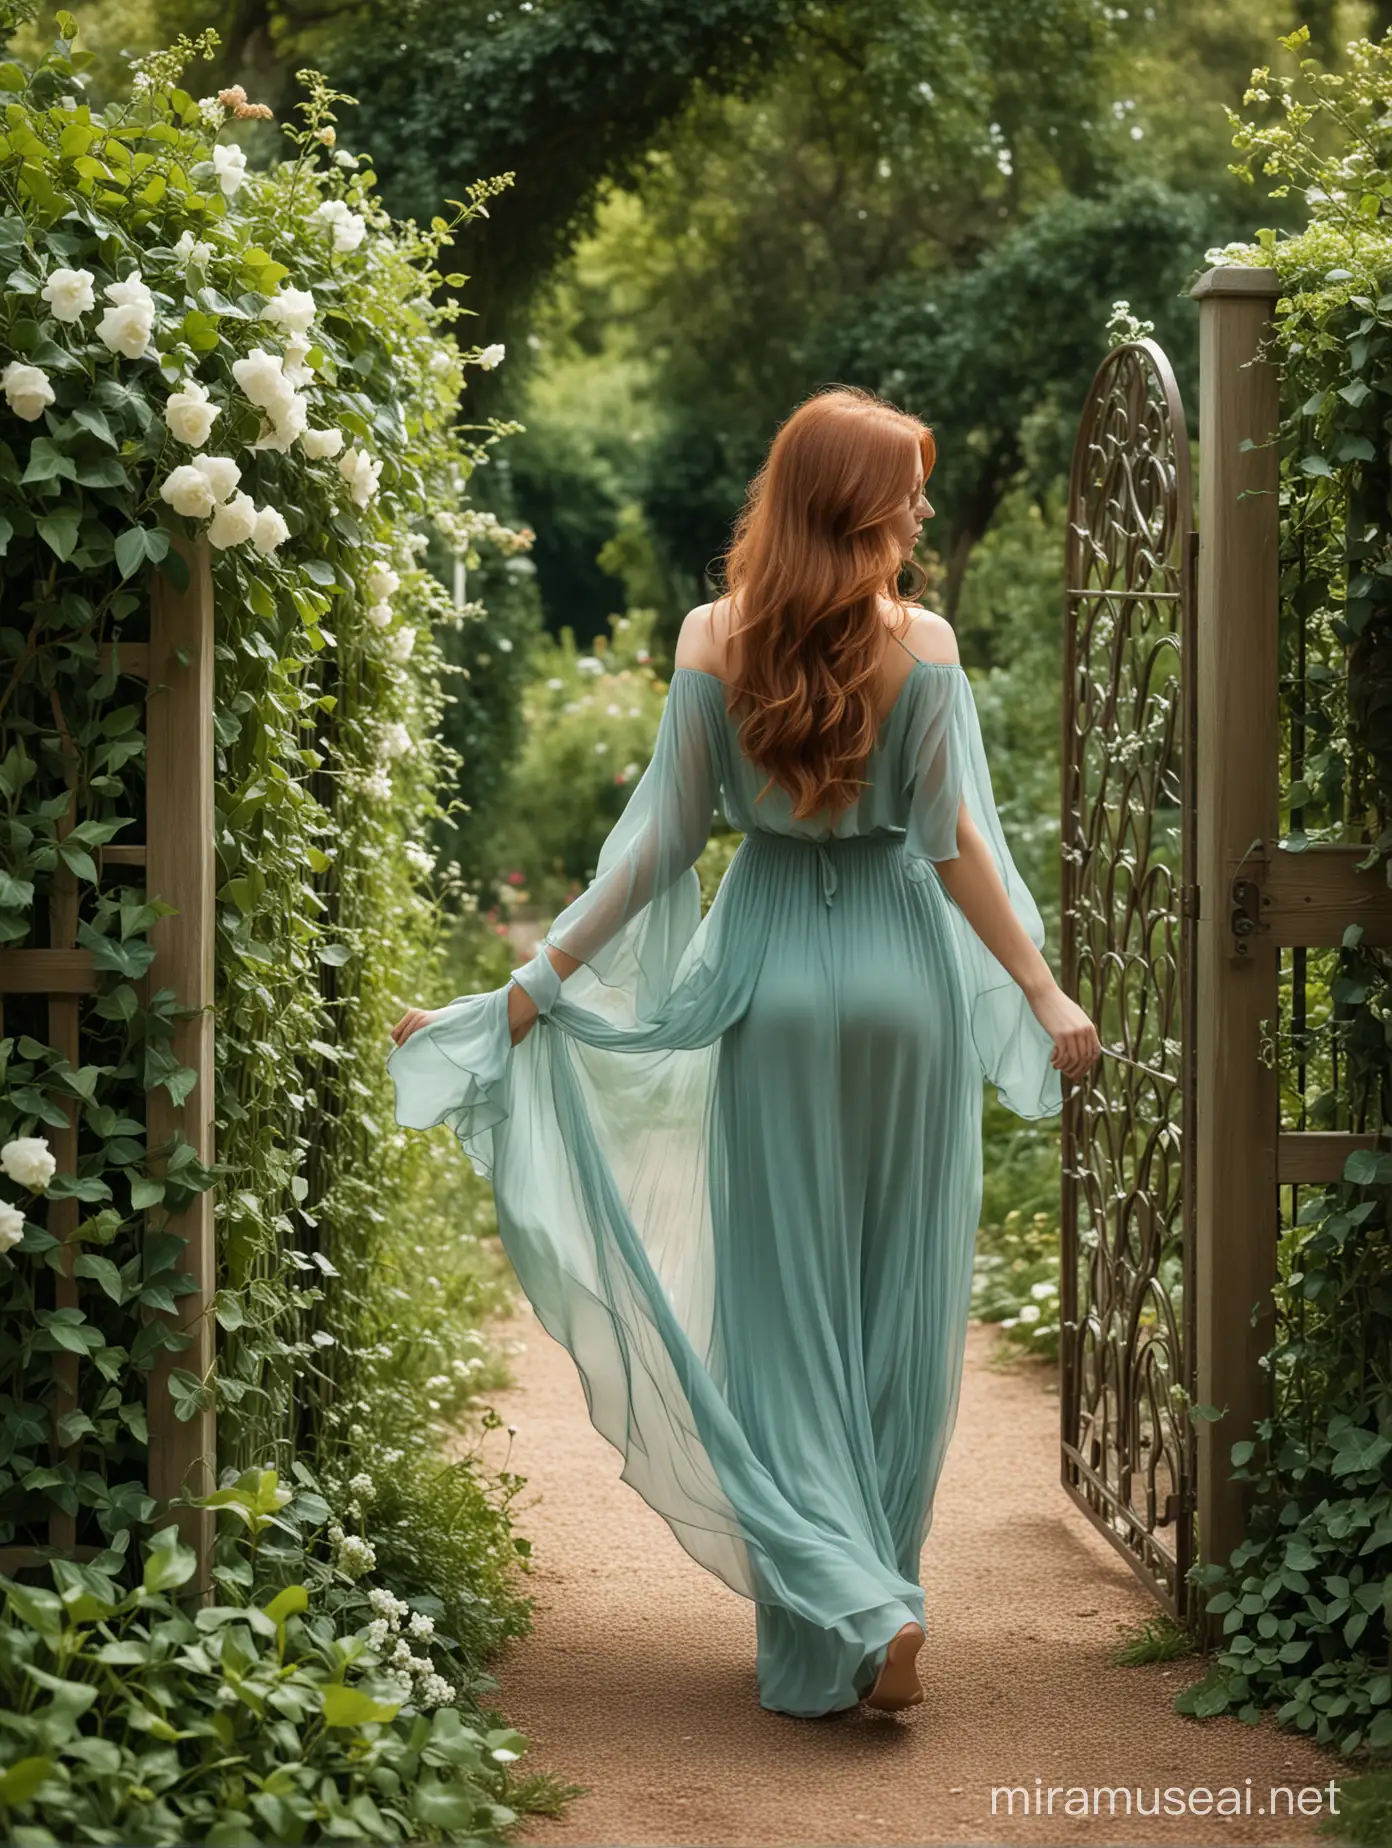 Beautiful Woman in Pale Teal Chiffon Dress Entering Secret Garden